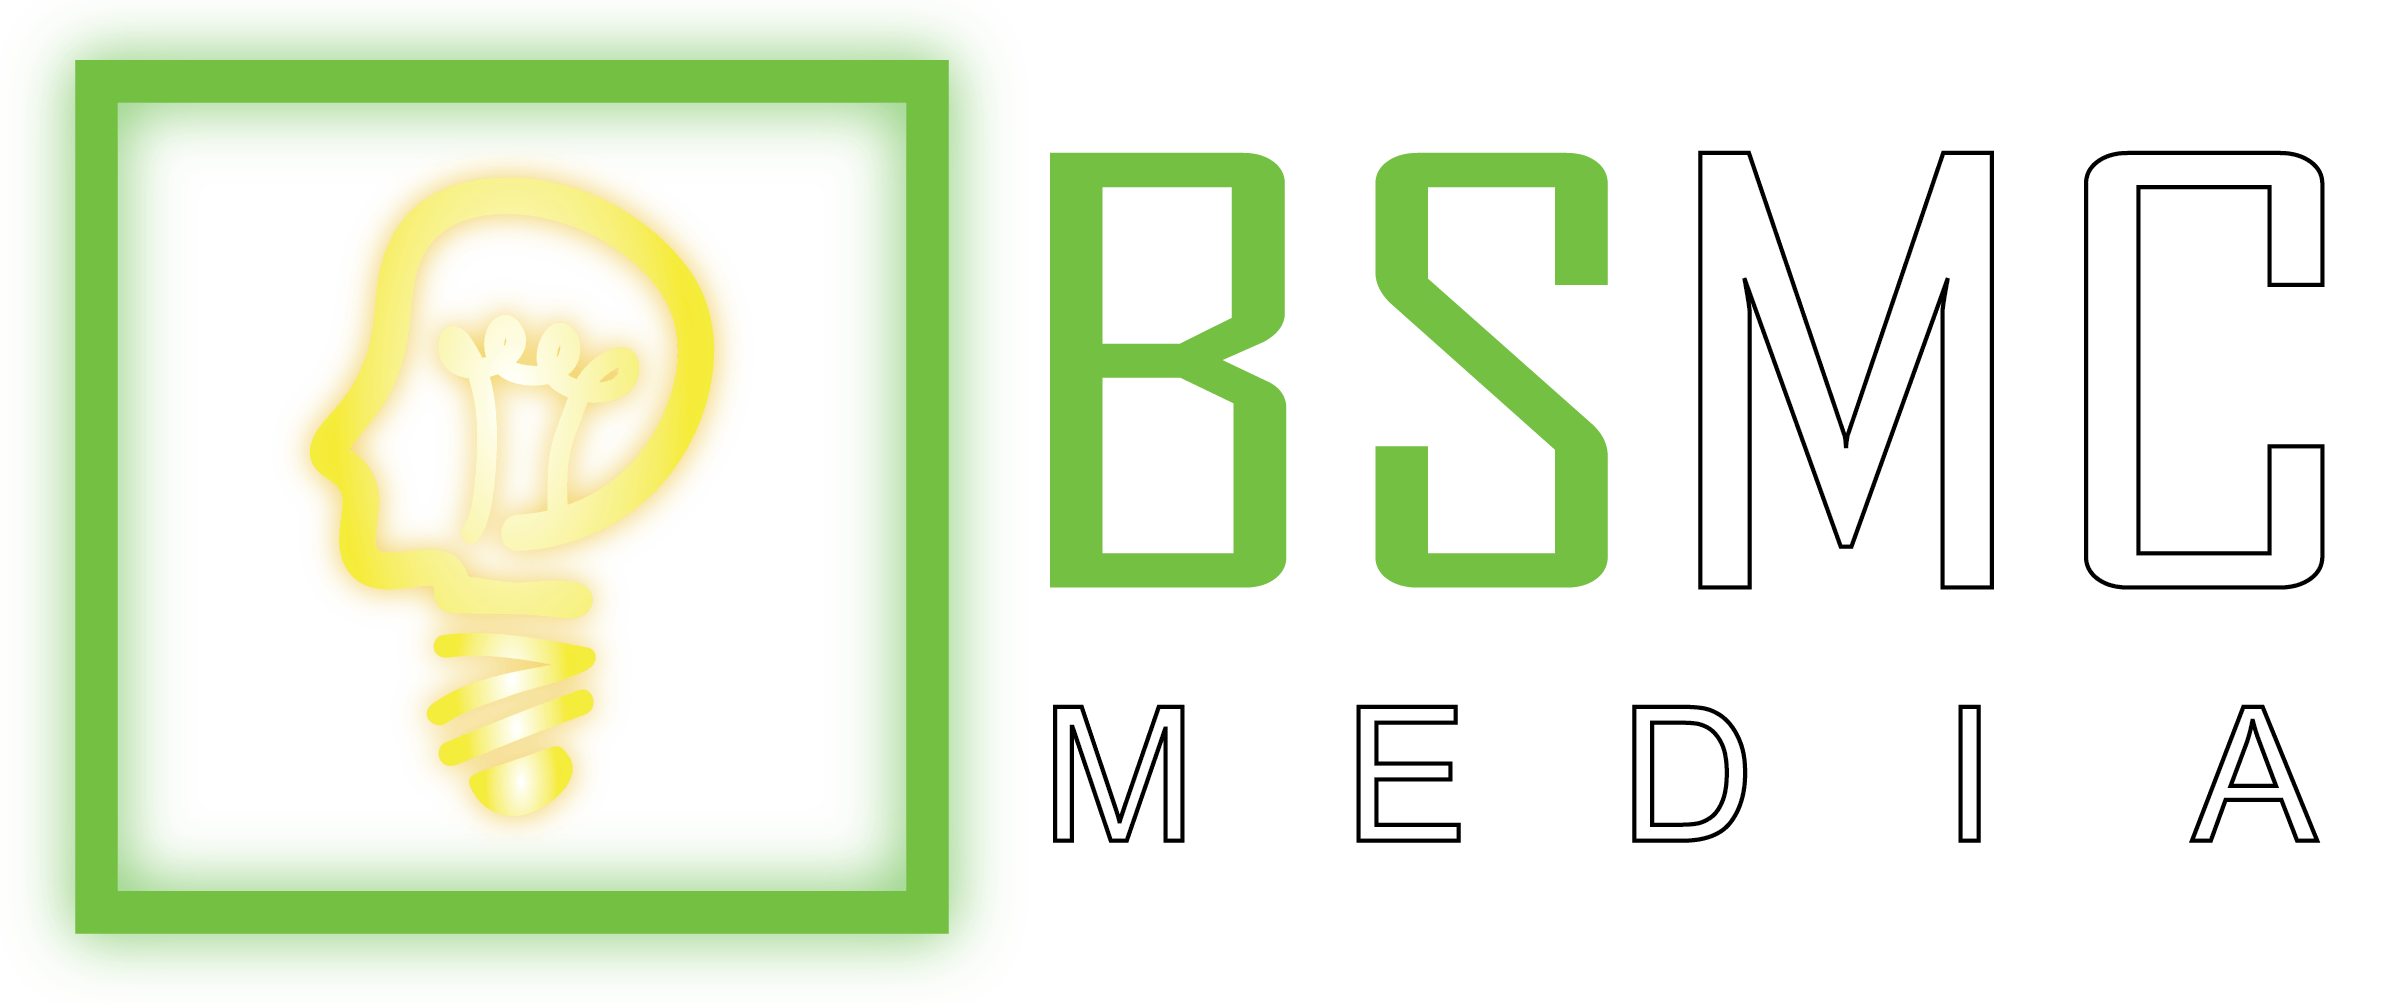 BSMC Logo - Digital Marketing Agency in Hackensack, NJ - We Specialize in Local ...